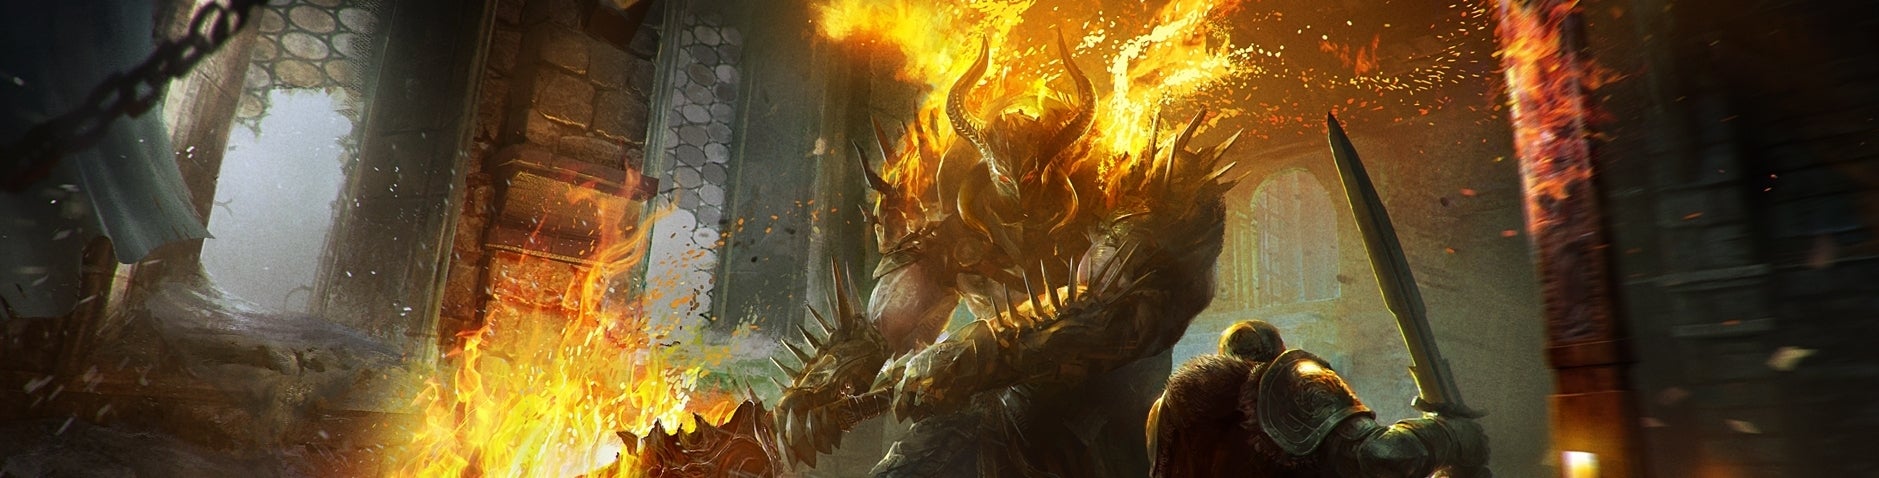 Image for E3 DOJMY z Lords of the Fallen